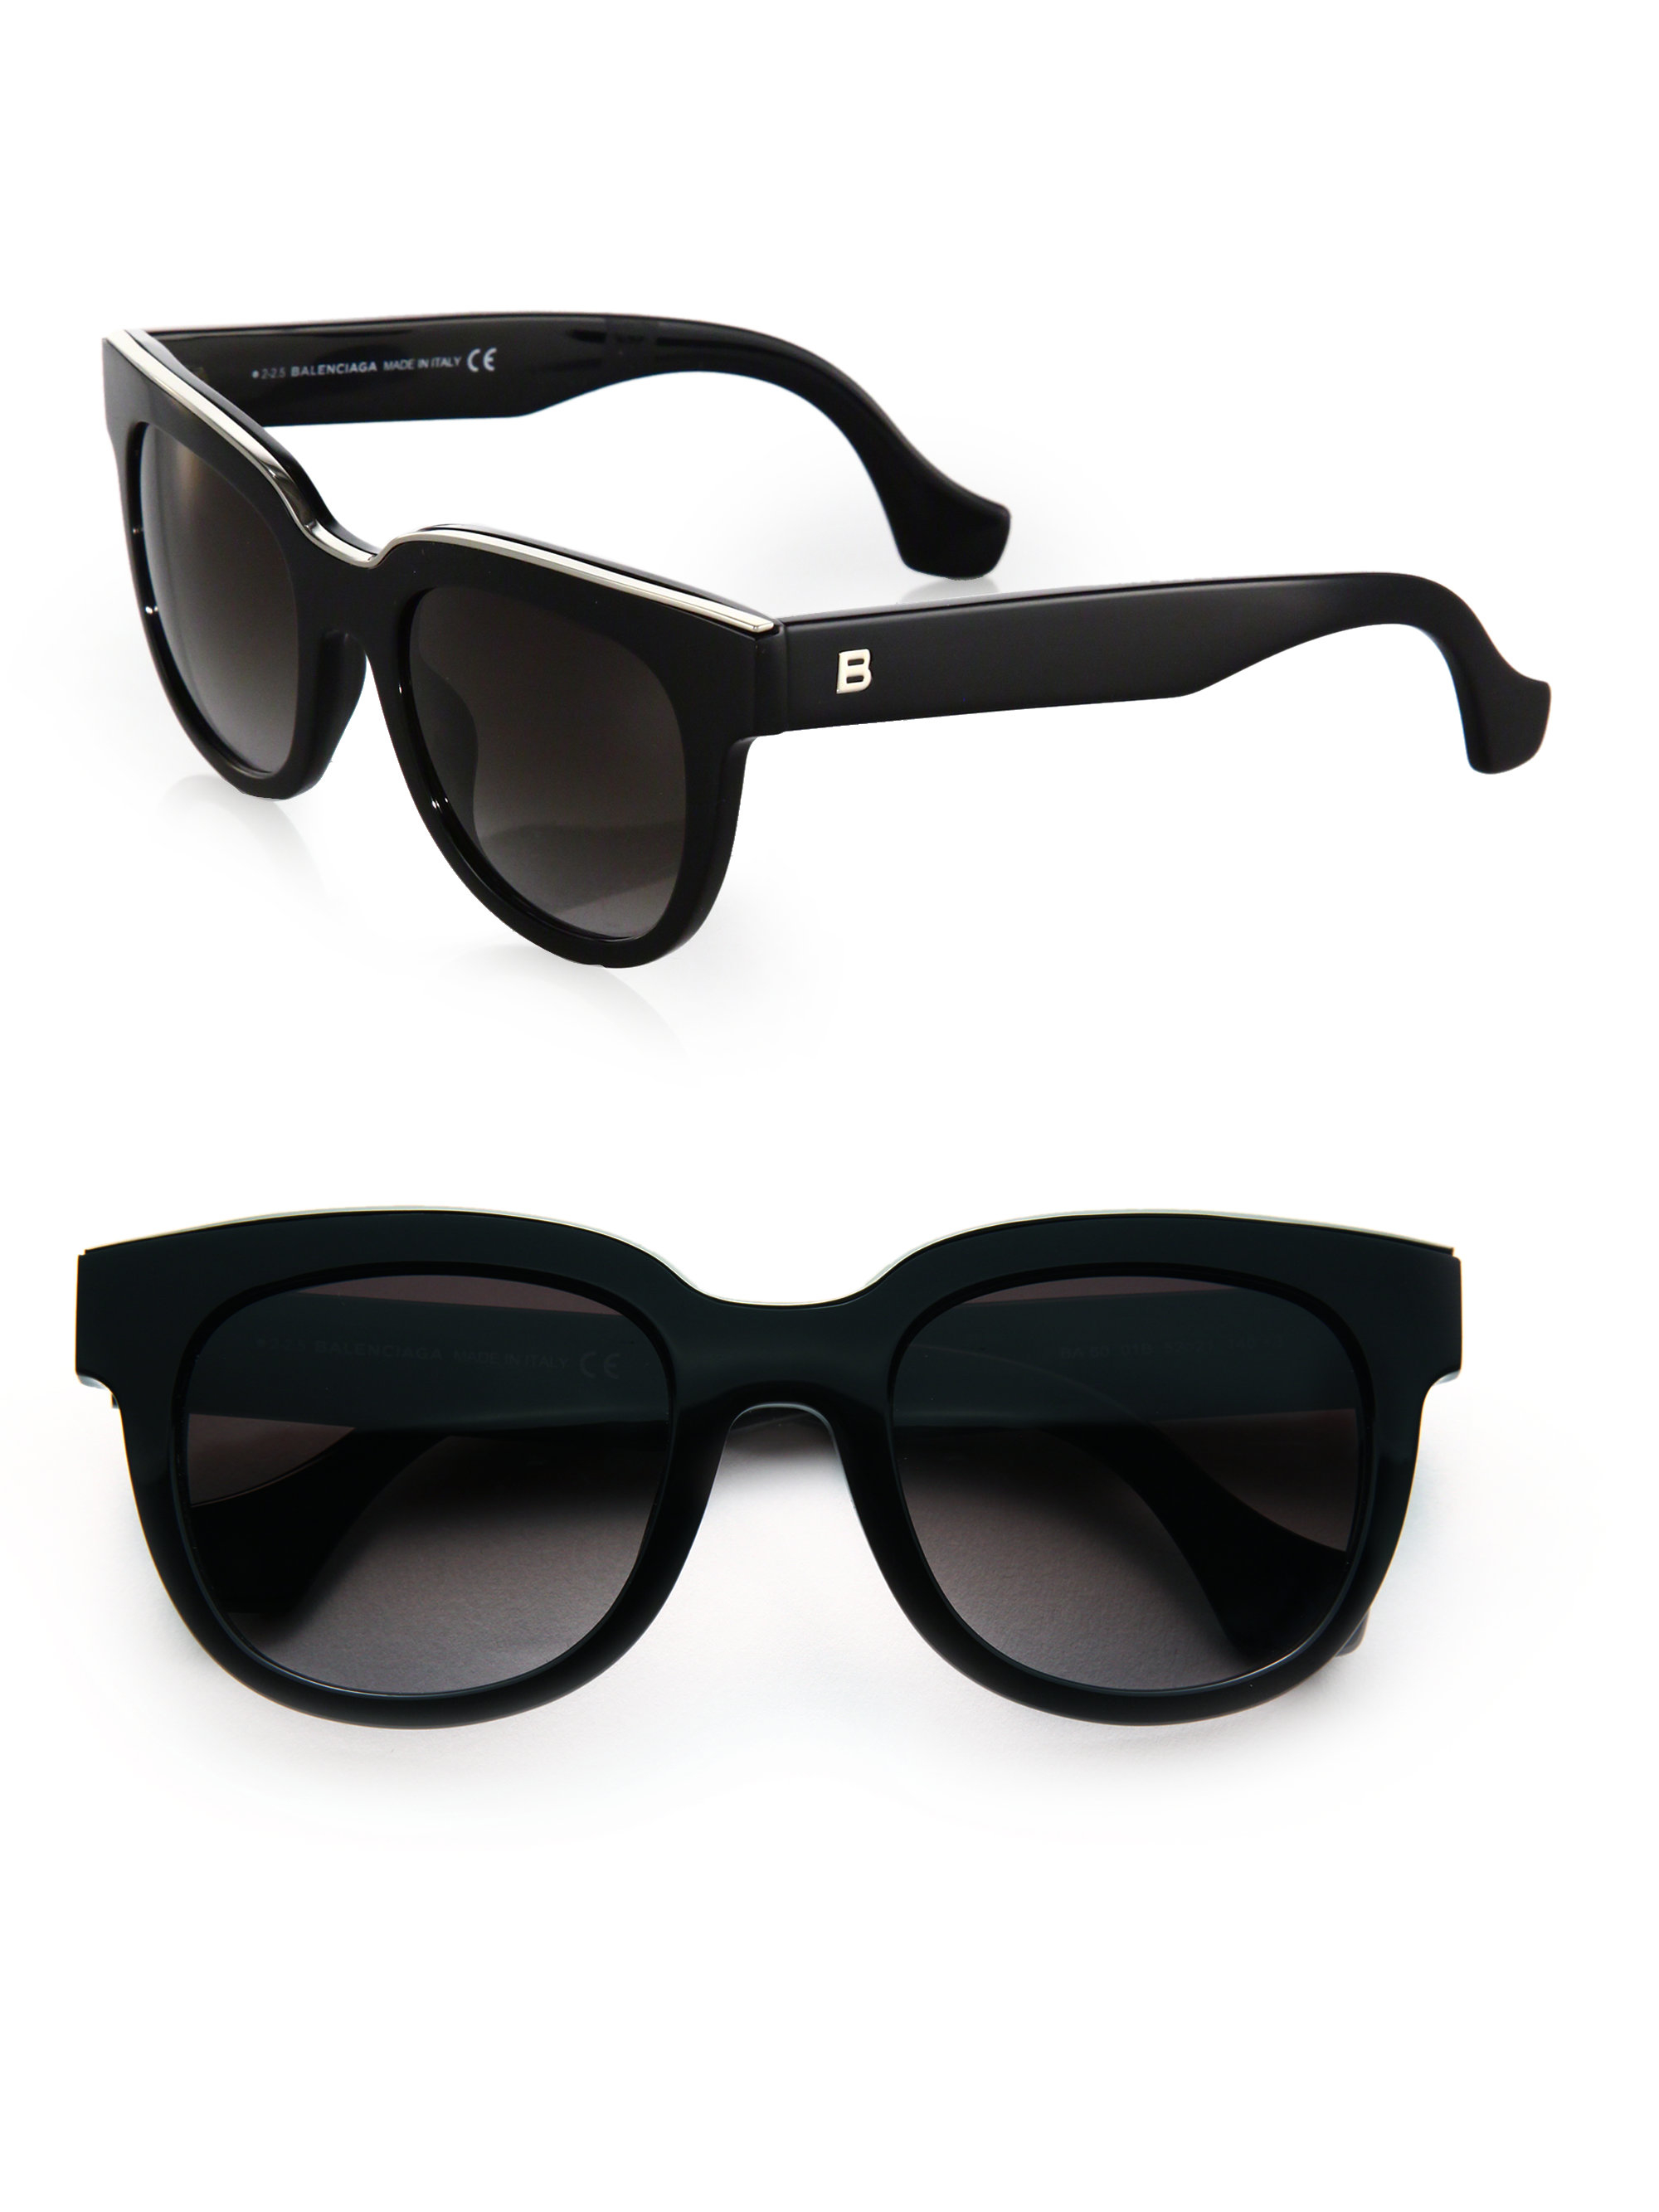 Balenciaga 52mm Acetate & Metal Square Sunglasses in Black | Lyst